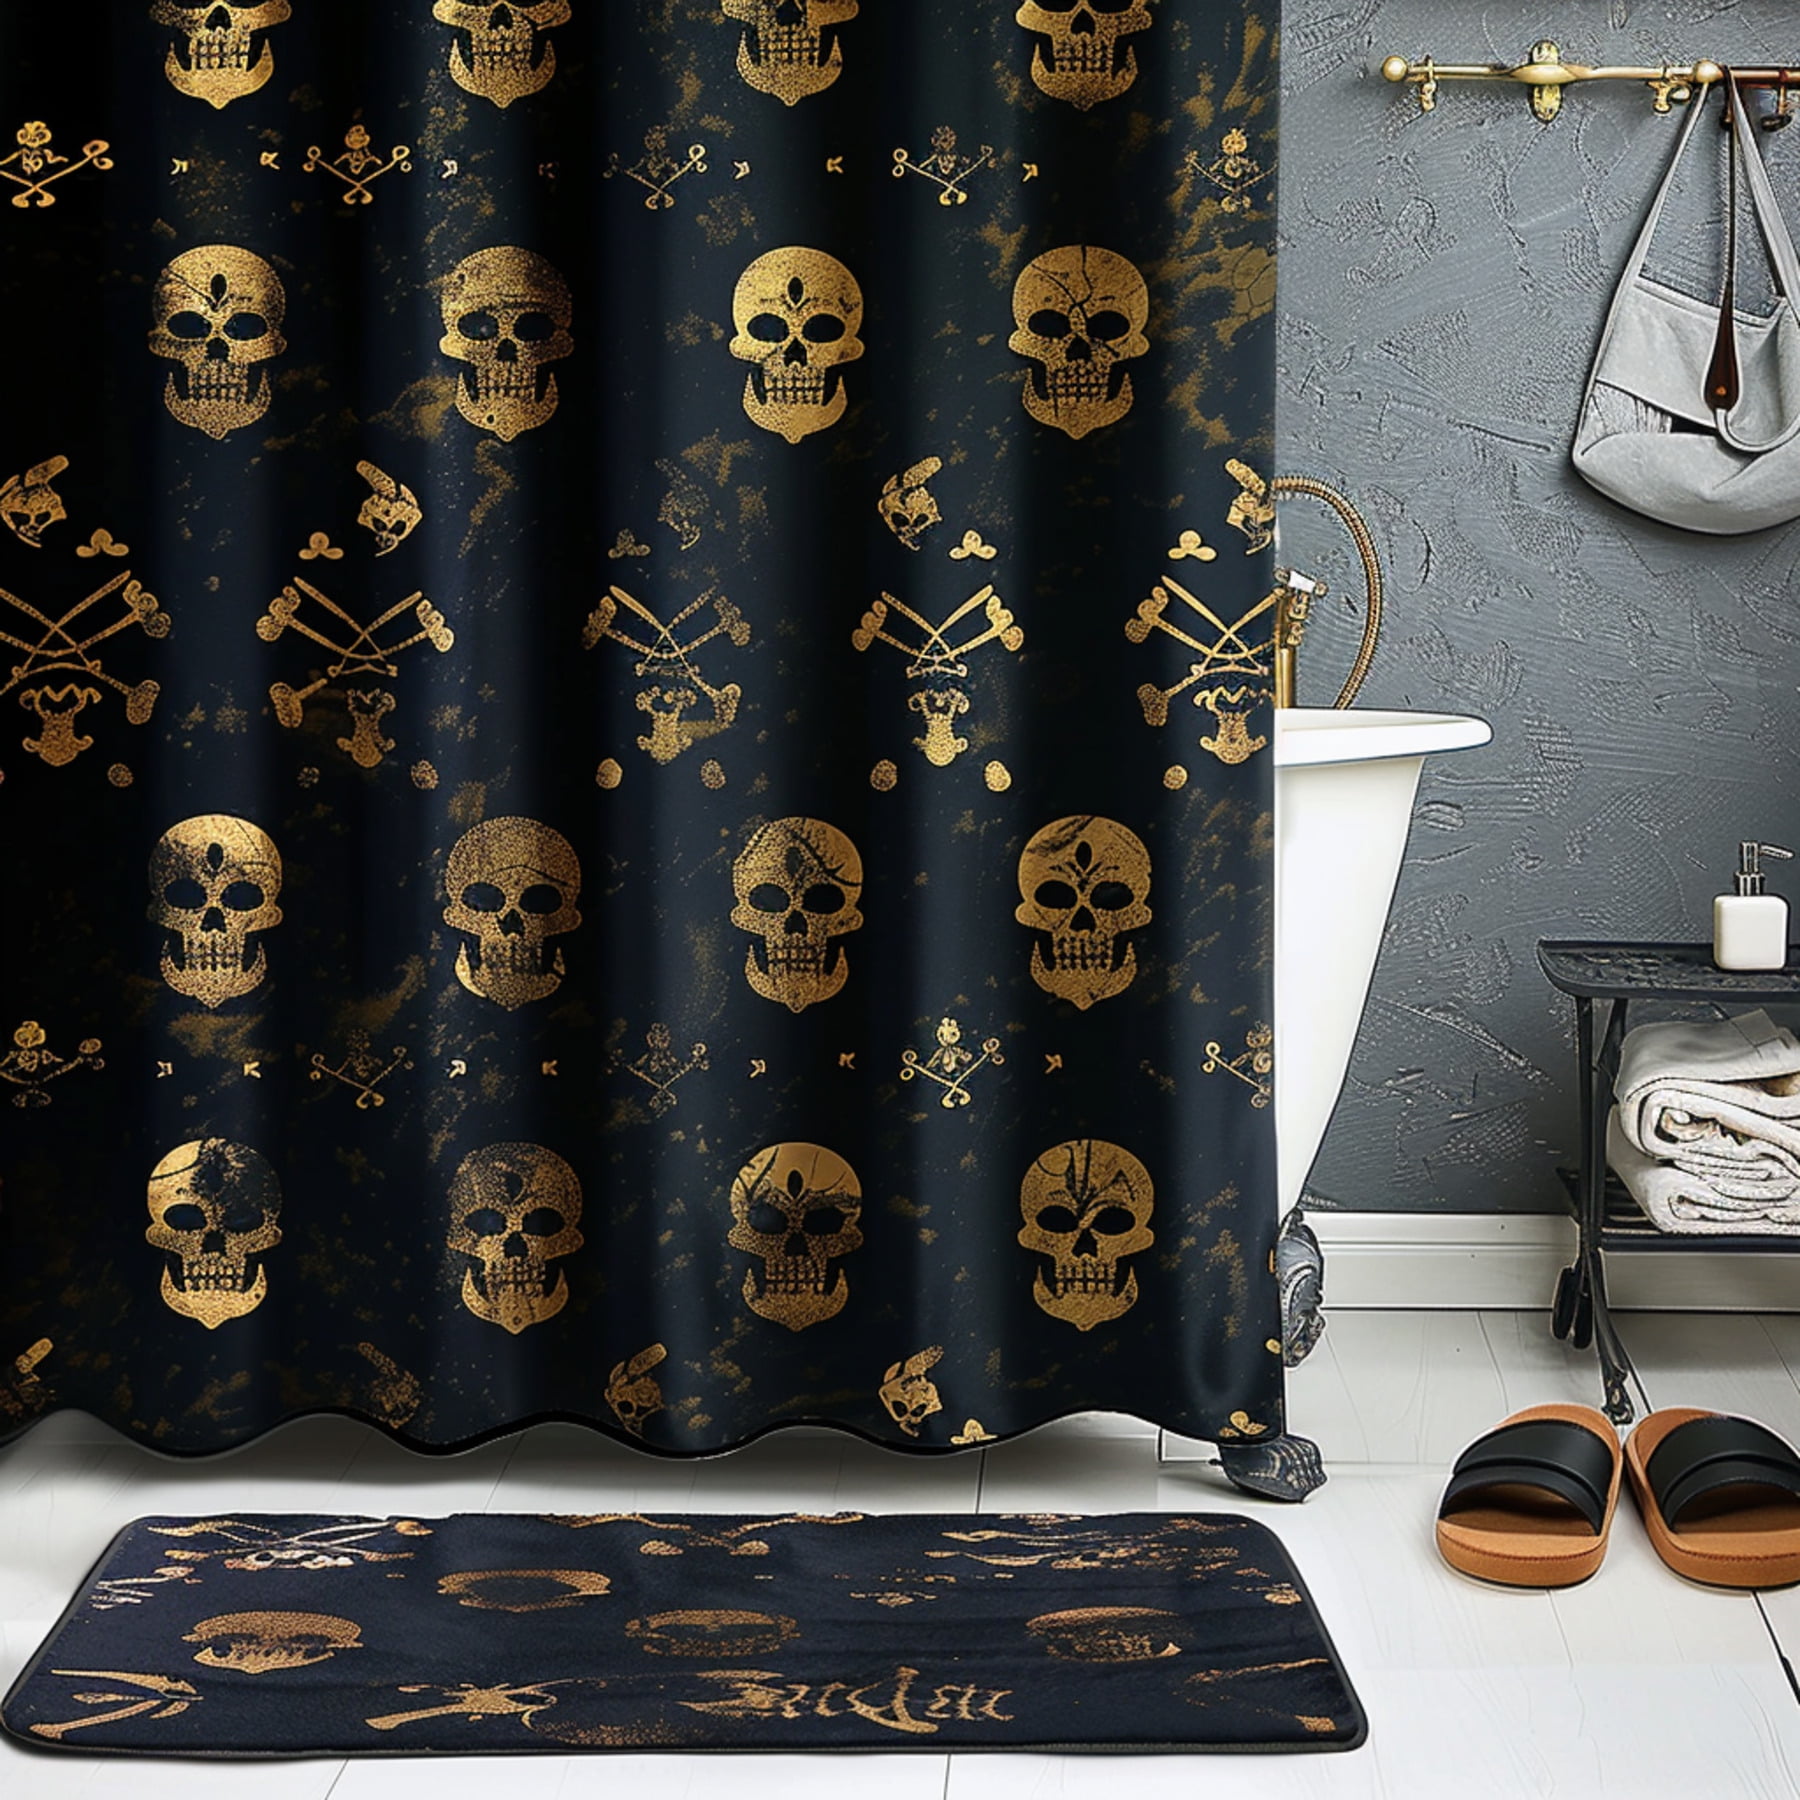 Skull & Bones Pirate Shower Curtain Gothic Style Black & Gold Pattern ...